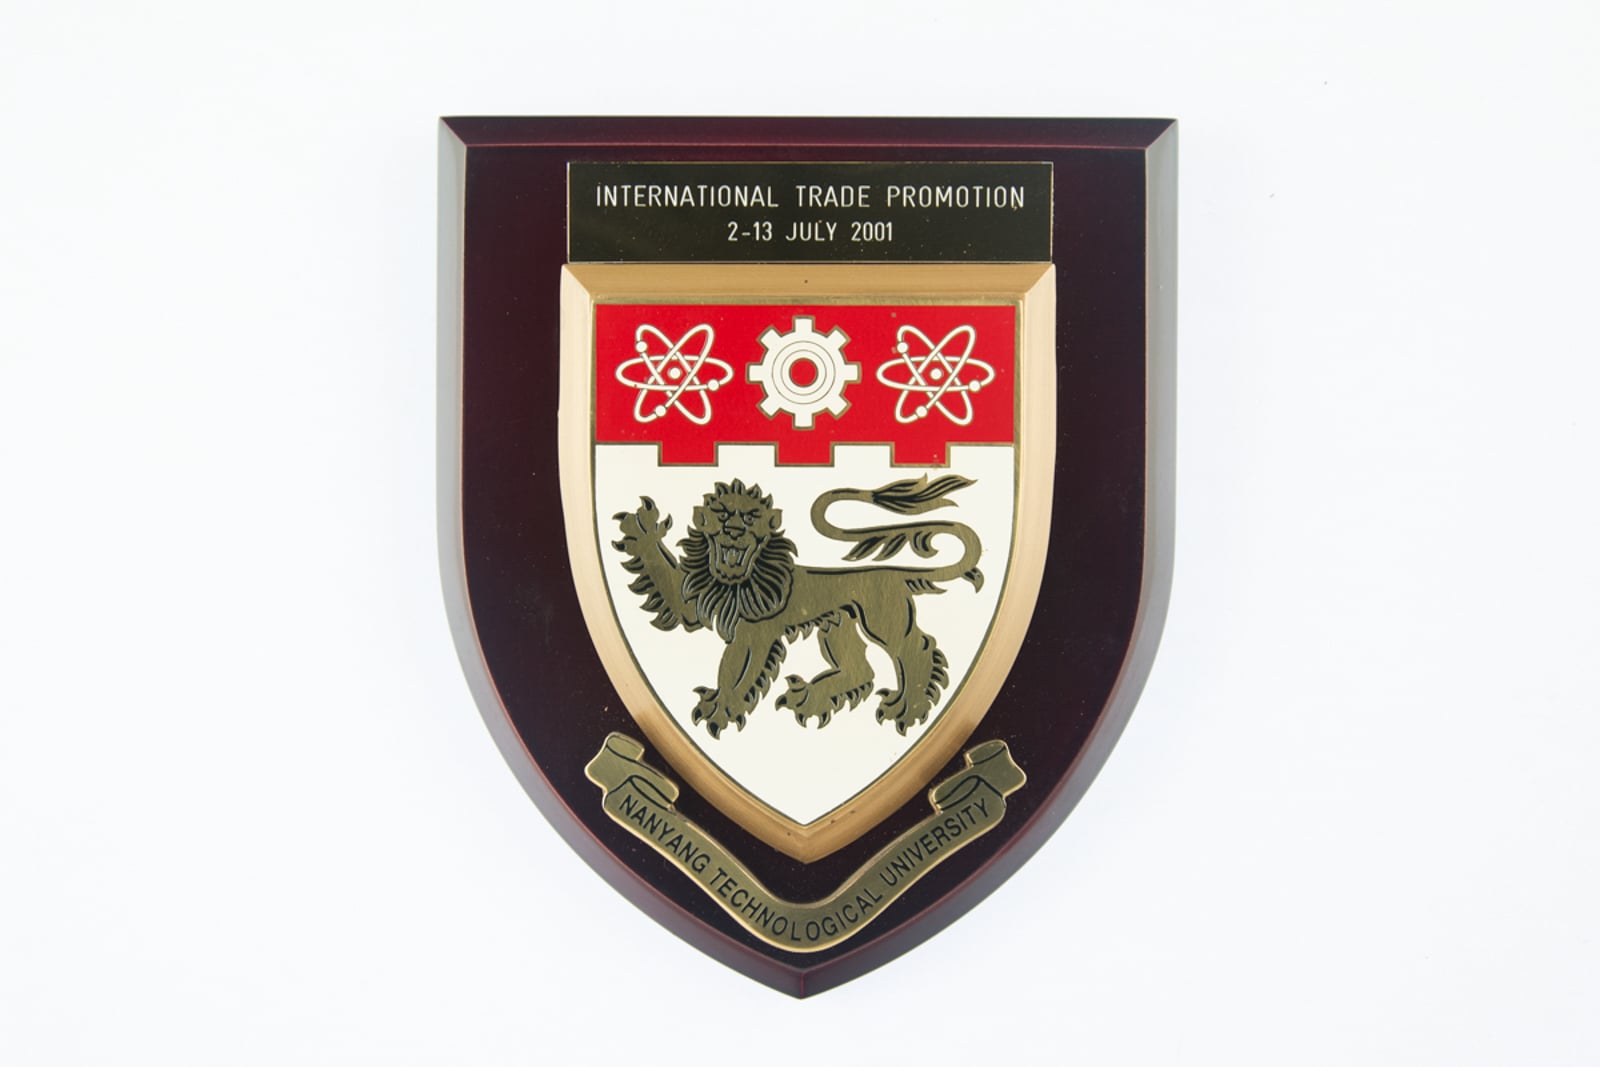 NTU International Trade Promotion Plaque 2001